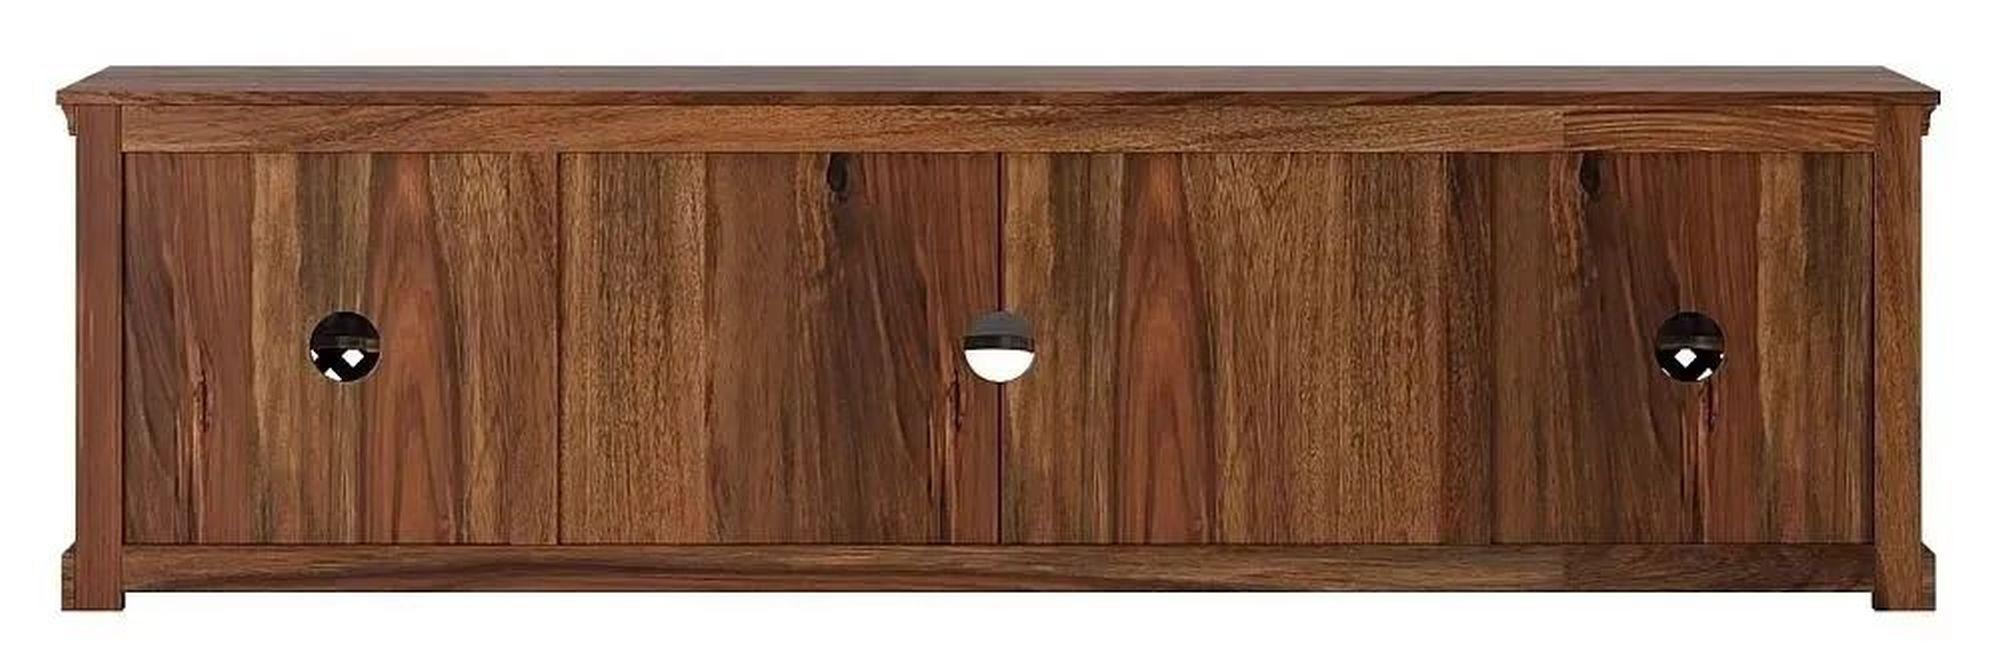 Maharani Sheesham TV Unit, Indian Wood, Wide Cabinet 200cm, Stand Upto 75in Plasma TV, Lattice Jali Design - 2 Door with 1 Shelf